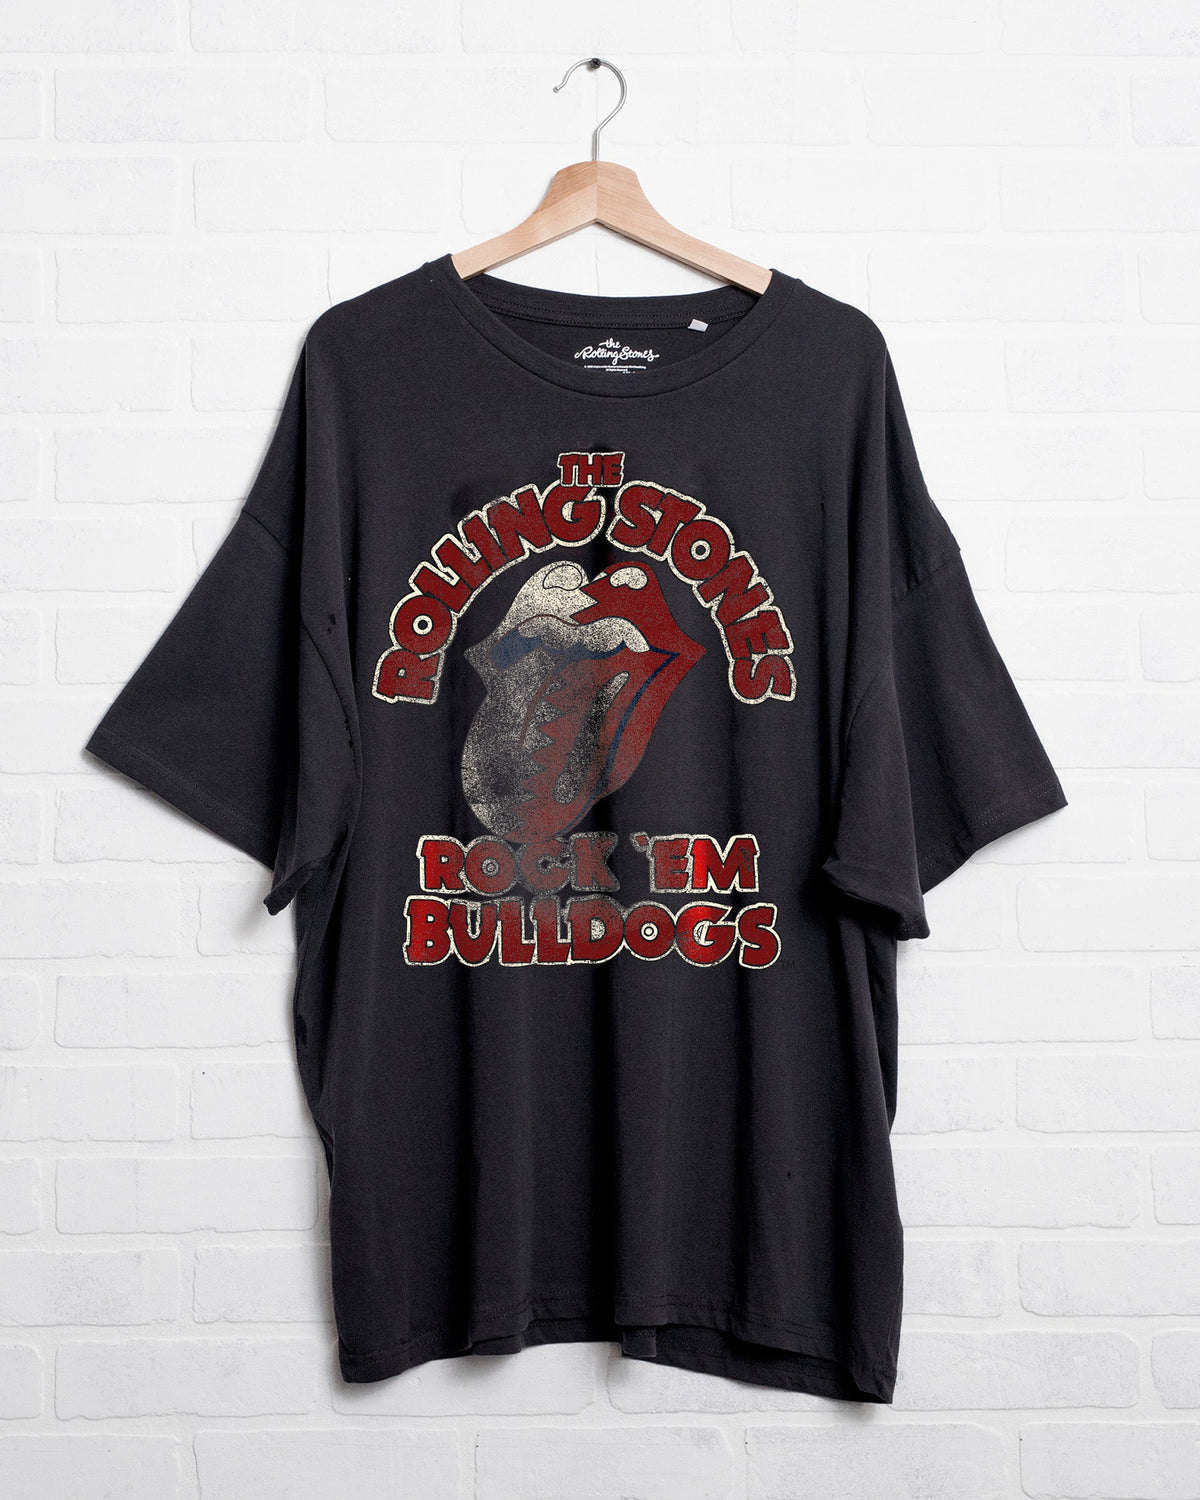 Rolling Stones Rock 'Em MSU Bulldogs Off Black Oversized Tee - shoplivylu